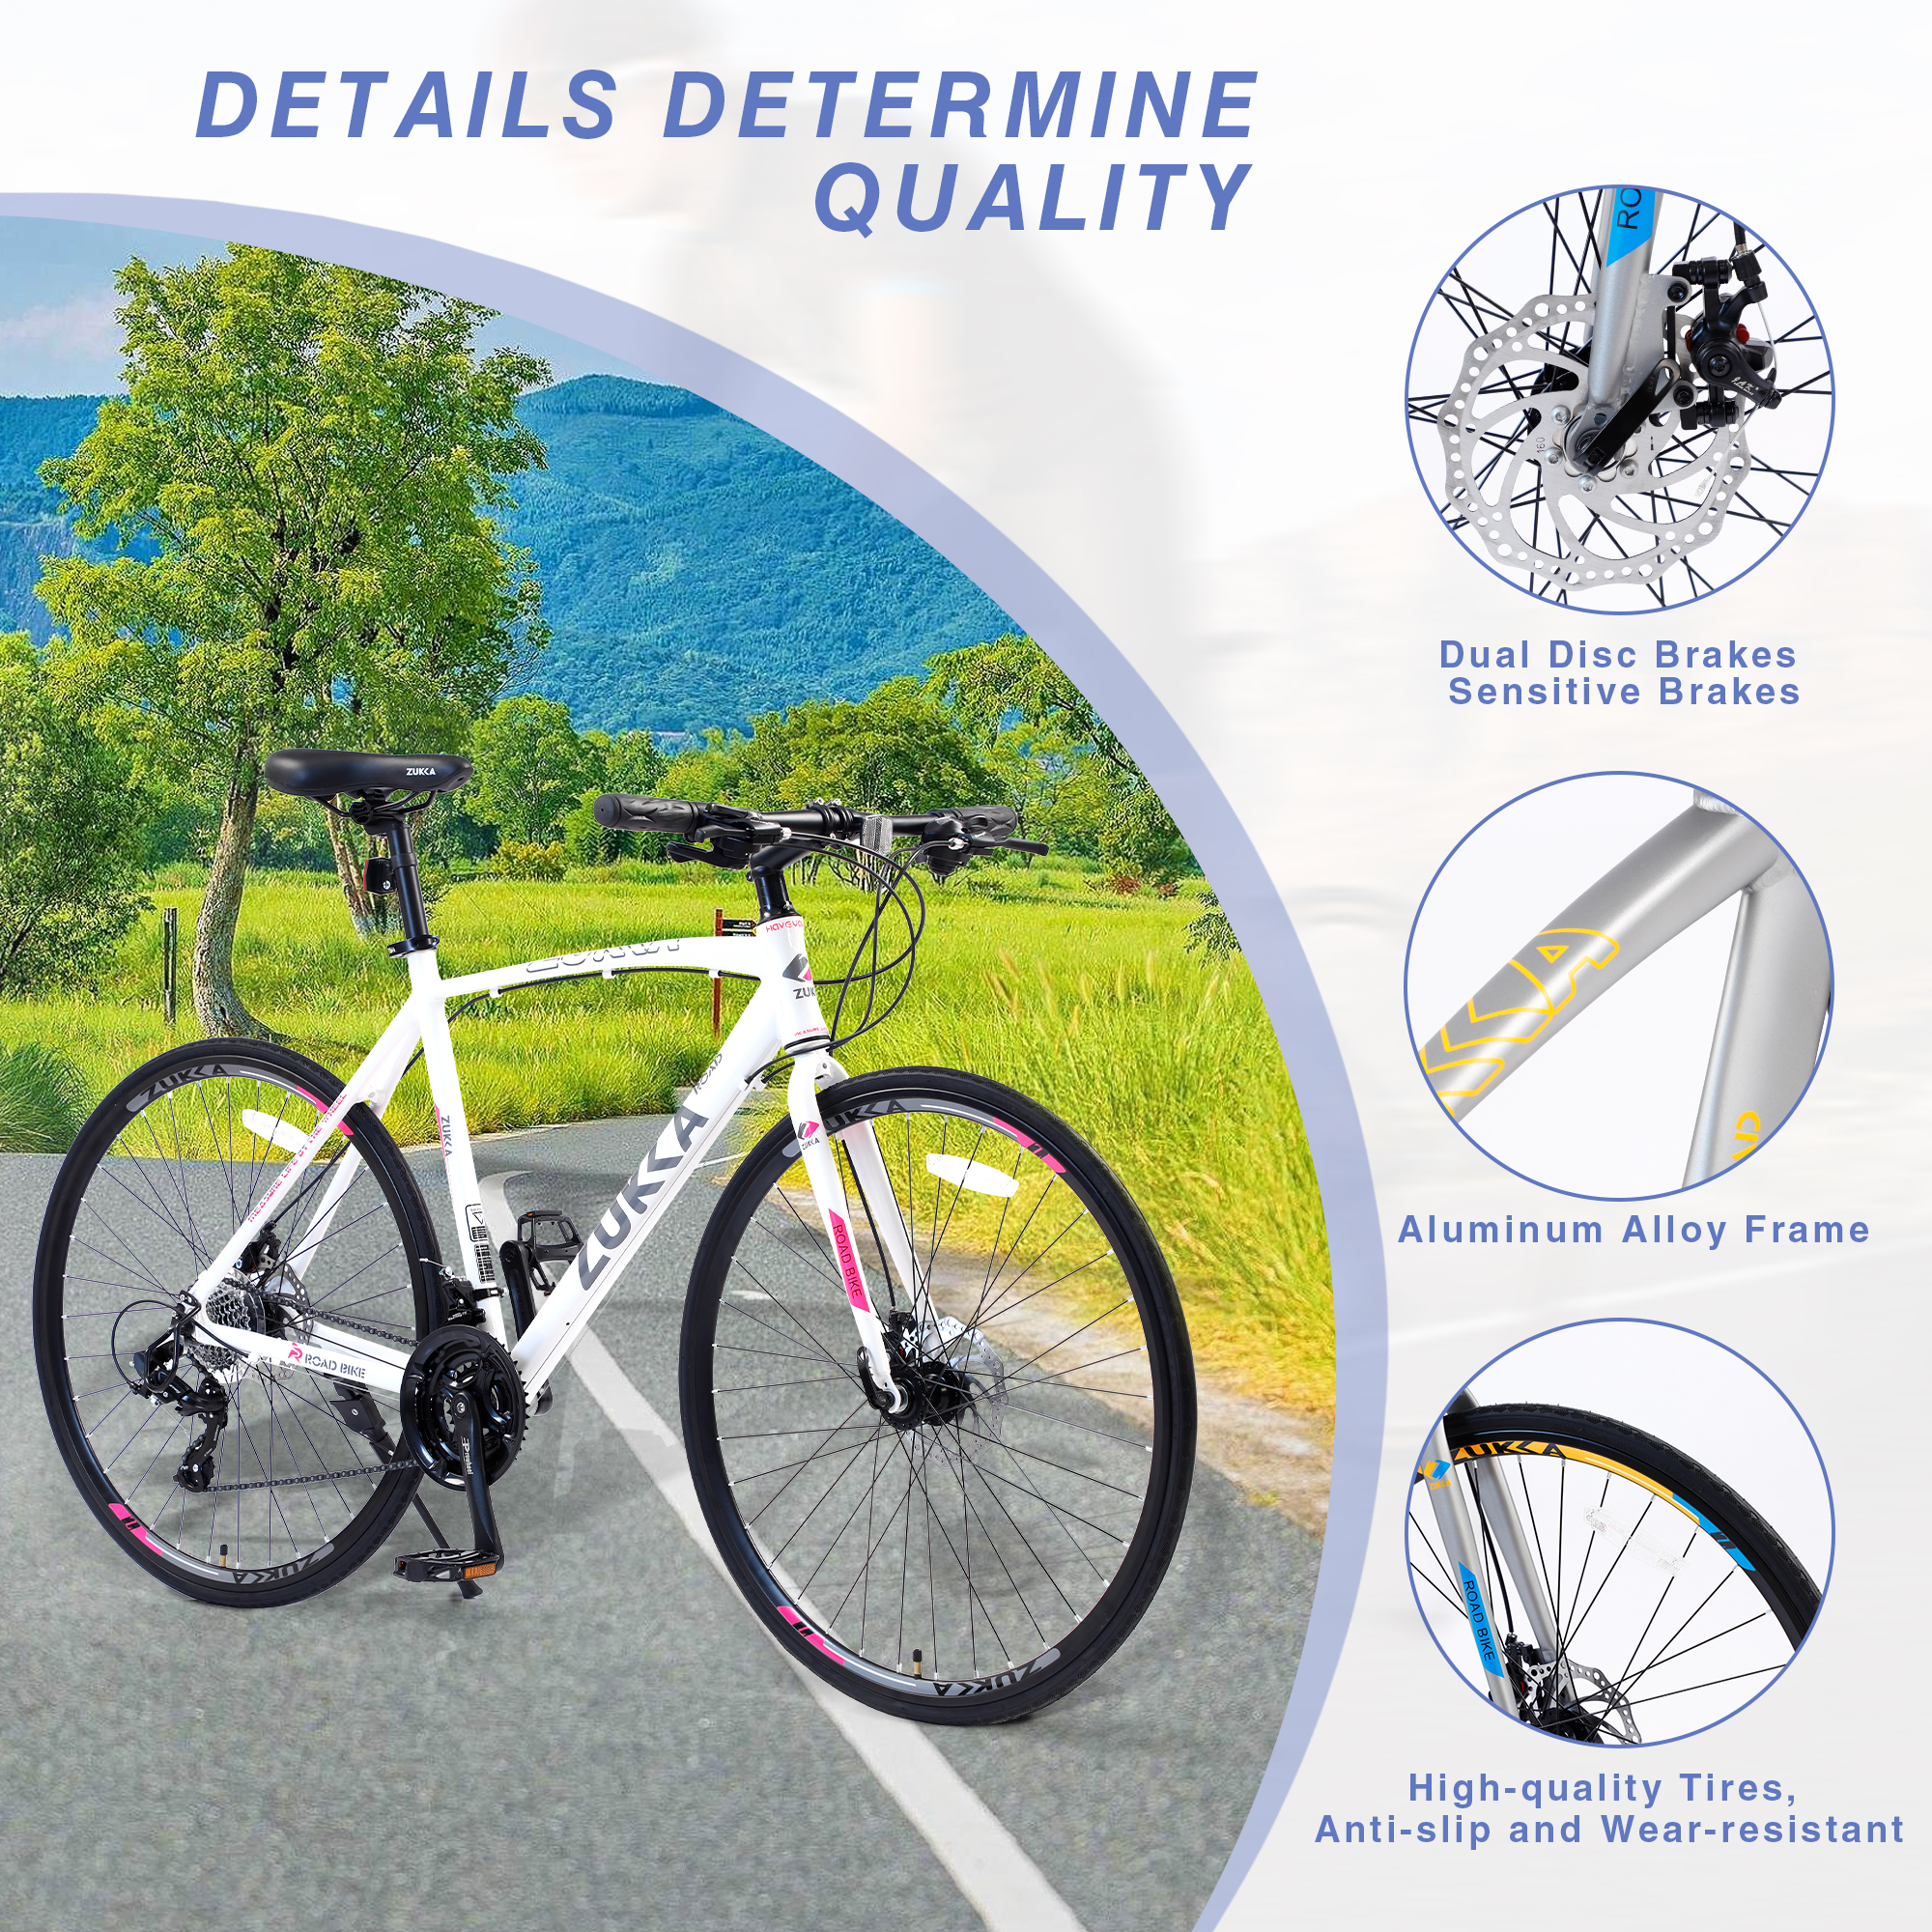 24 Speed Road Bike for Men Women, 700C Aluminum Flat Bar Road Bike with Disc Brakes, White - image 4 of 6